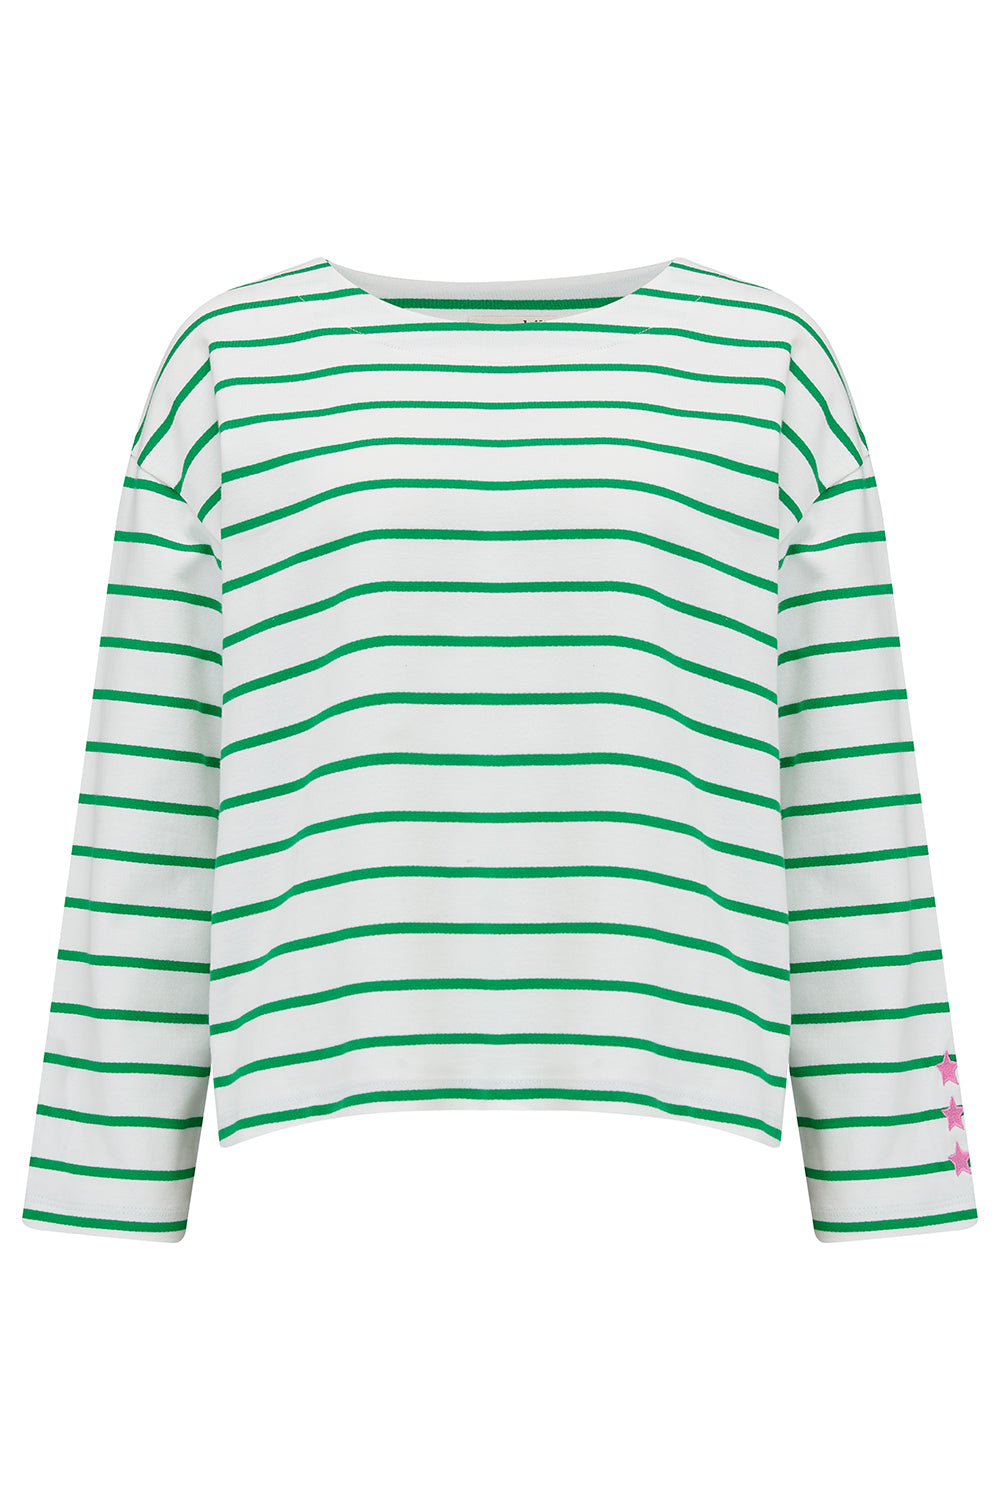 Shop Sugarhill Brighton Women's Green / White Billie Breton Top Off-white/green, Star Cuff In Green/white